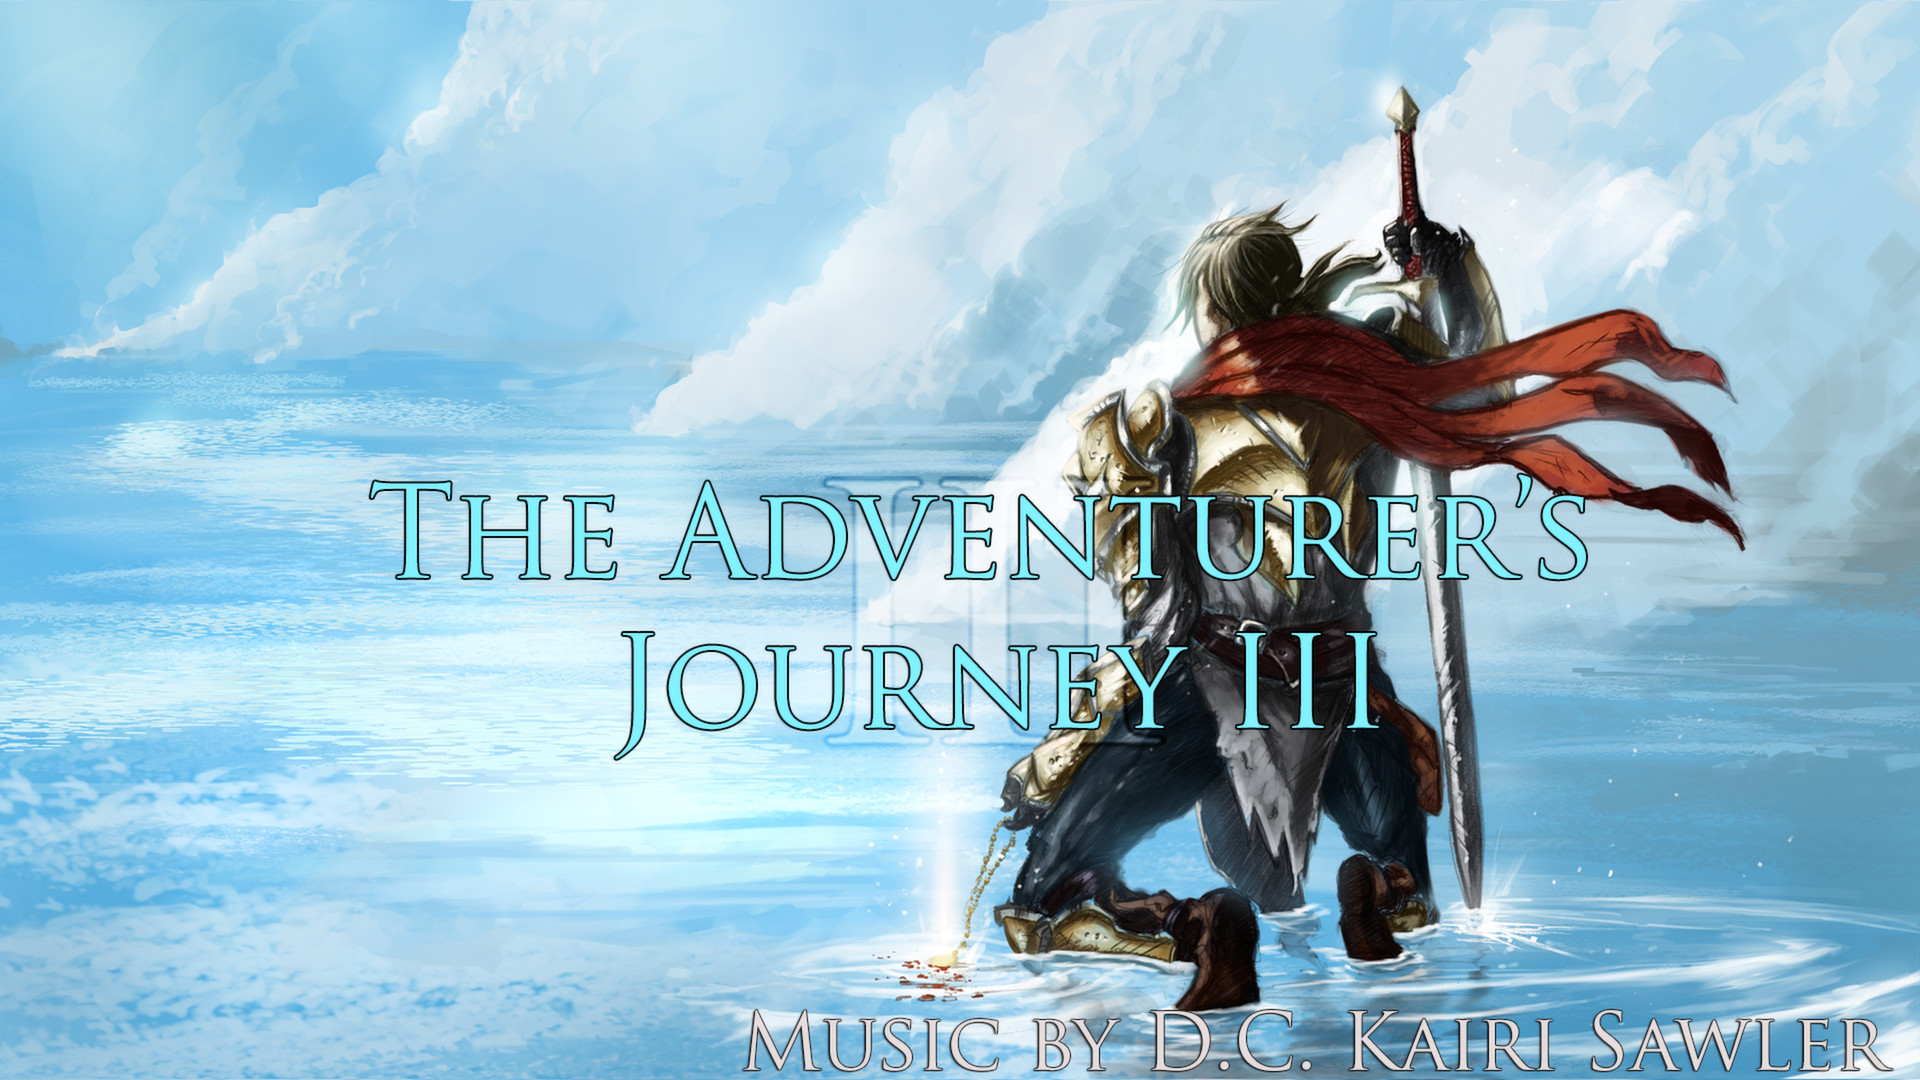 RPG Maker VX Ace - The Adventurer's Journey III DLC Steam CD Key 4.51 $